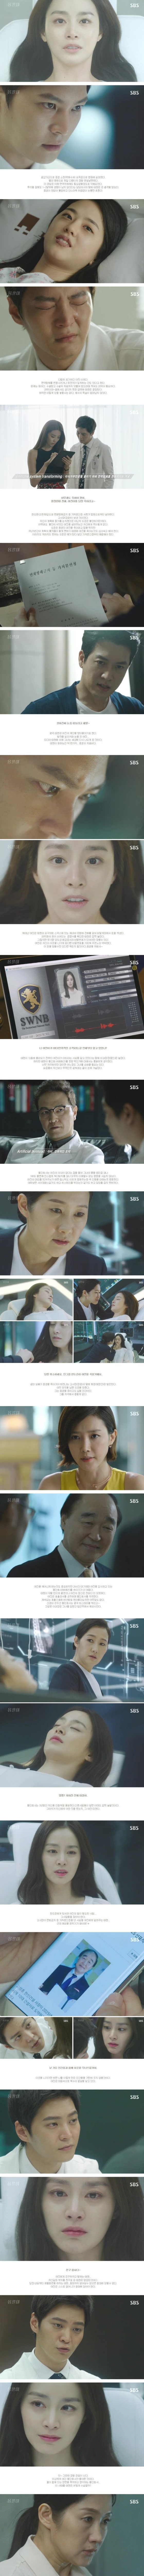 episode 5 captures for the Korean drama 'Yong Pal'